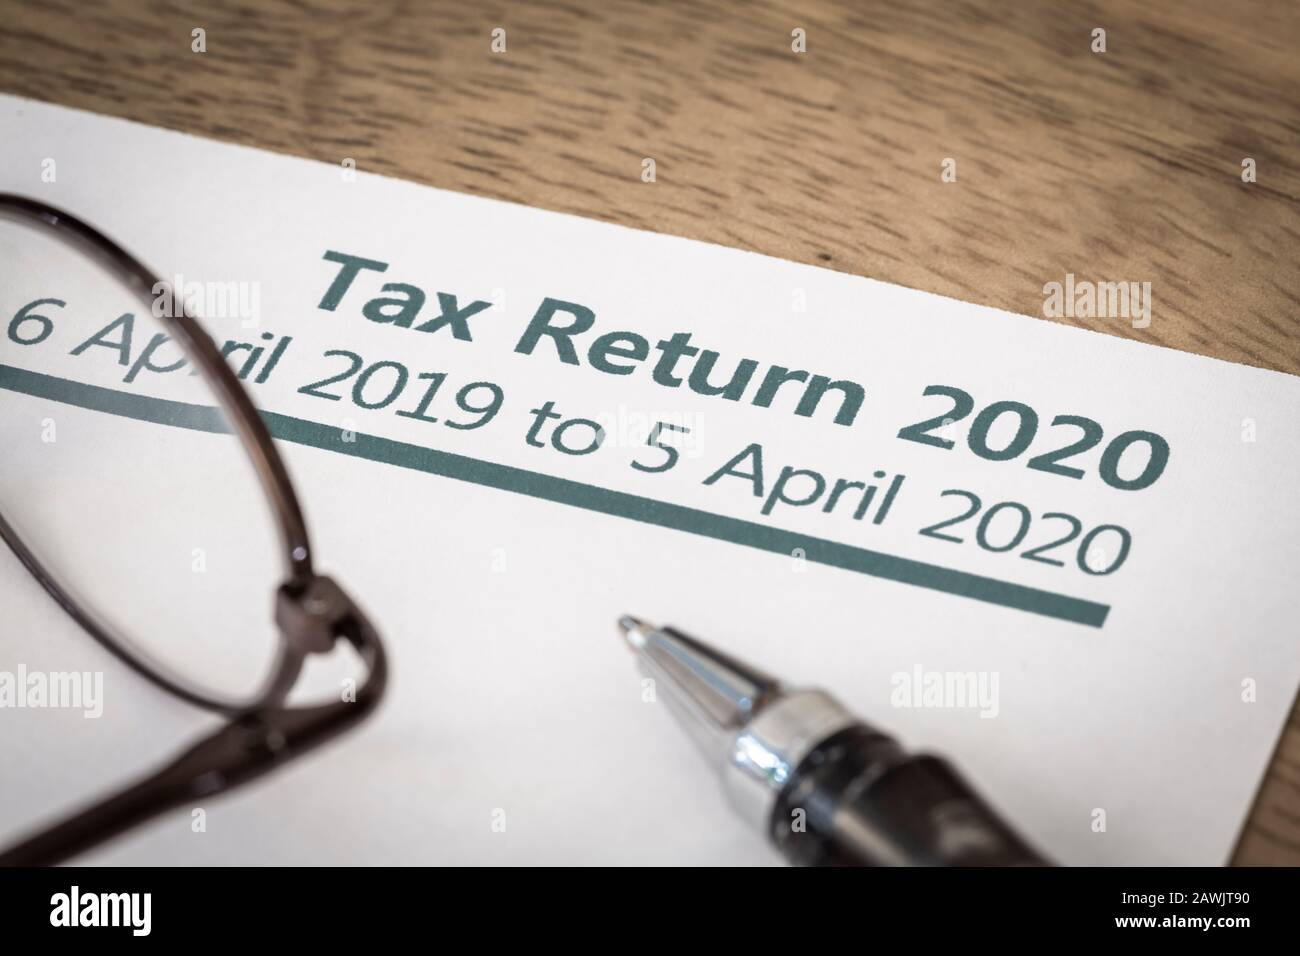 uk-hmrc-self-assessment-income-tax-return-form-2020-stock-photo-alamy